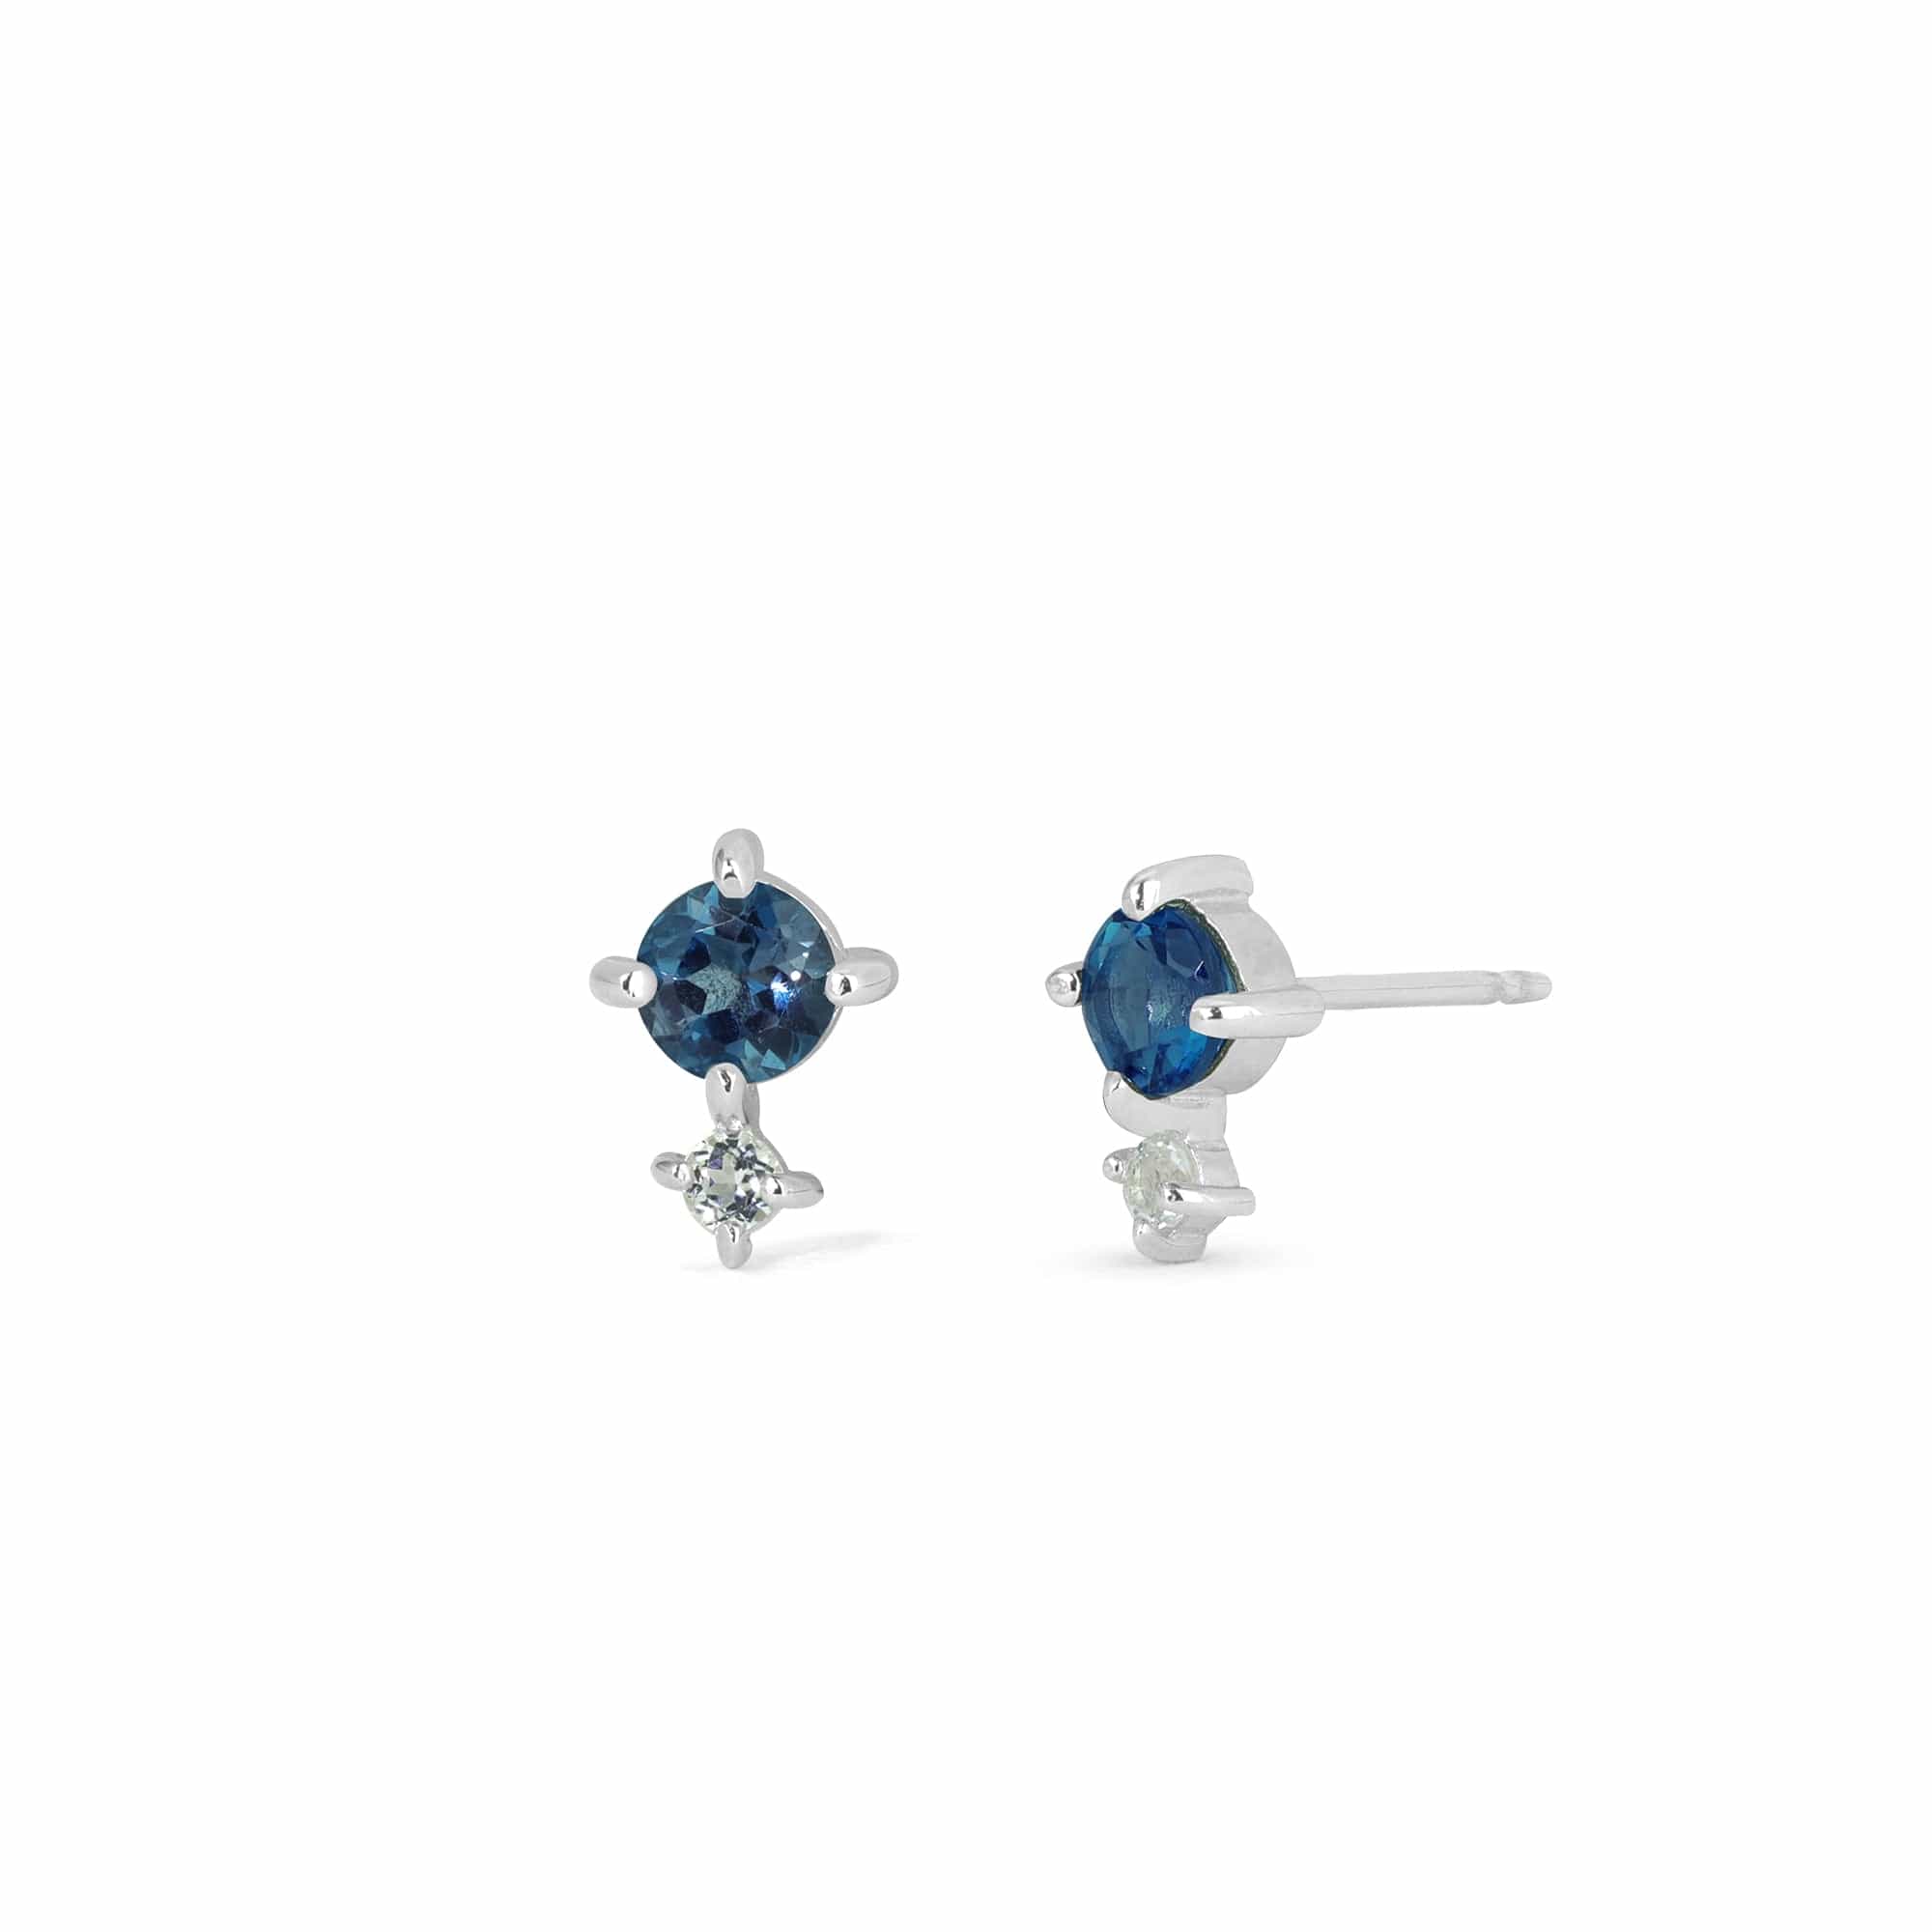 Boma Jewelry Earrings London Blue Topaz/White Topaz Colored Gemstone Studs with White Topaz